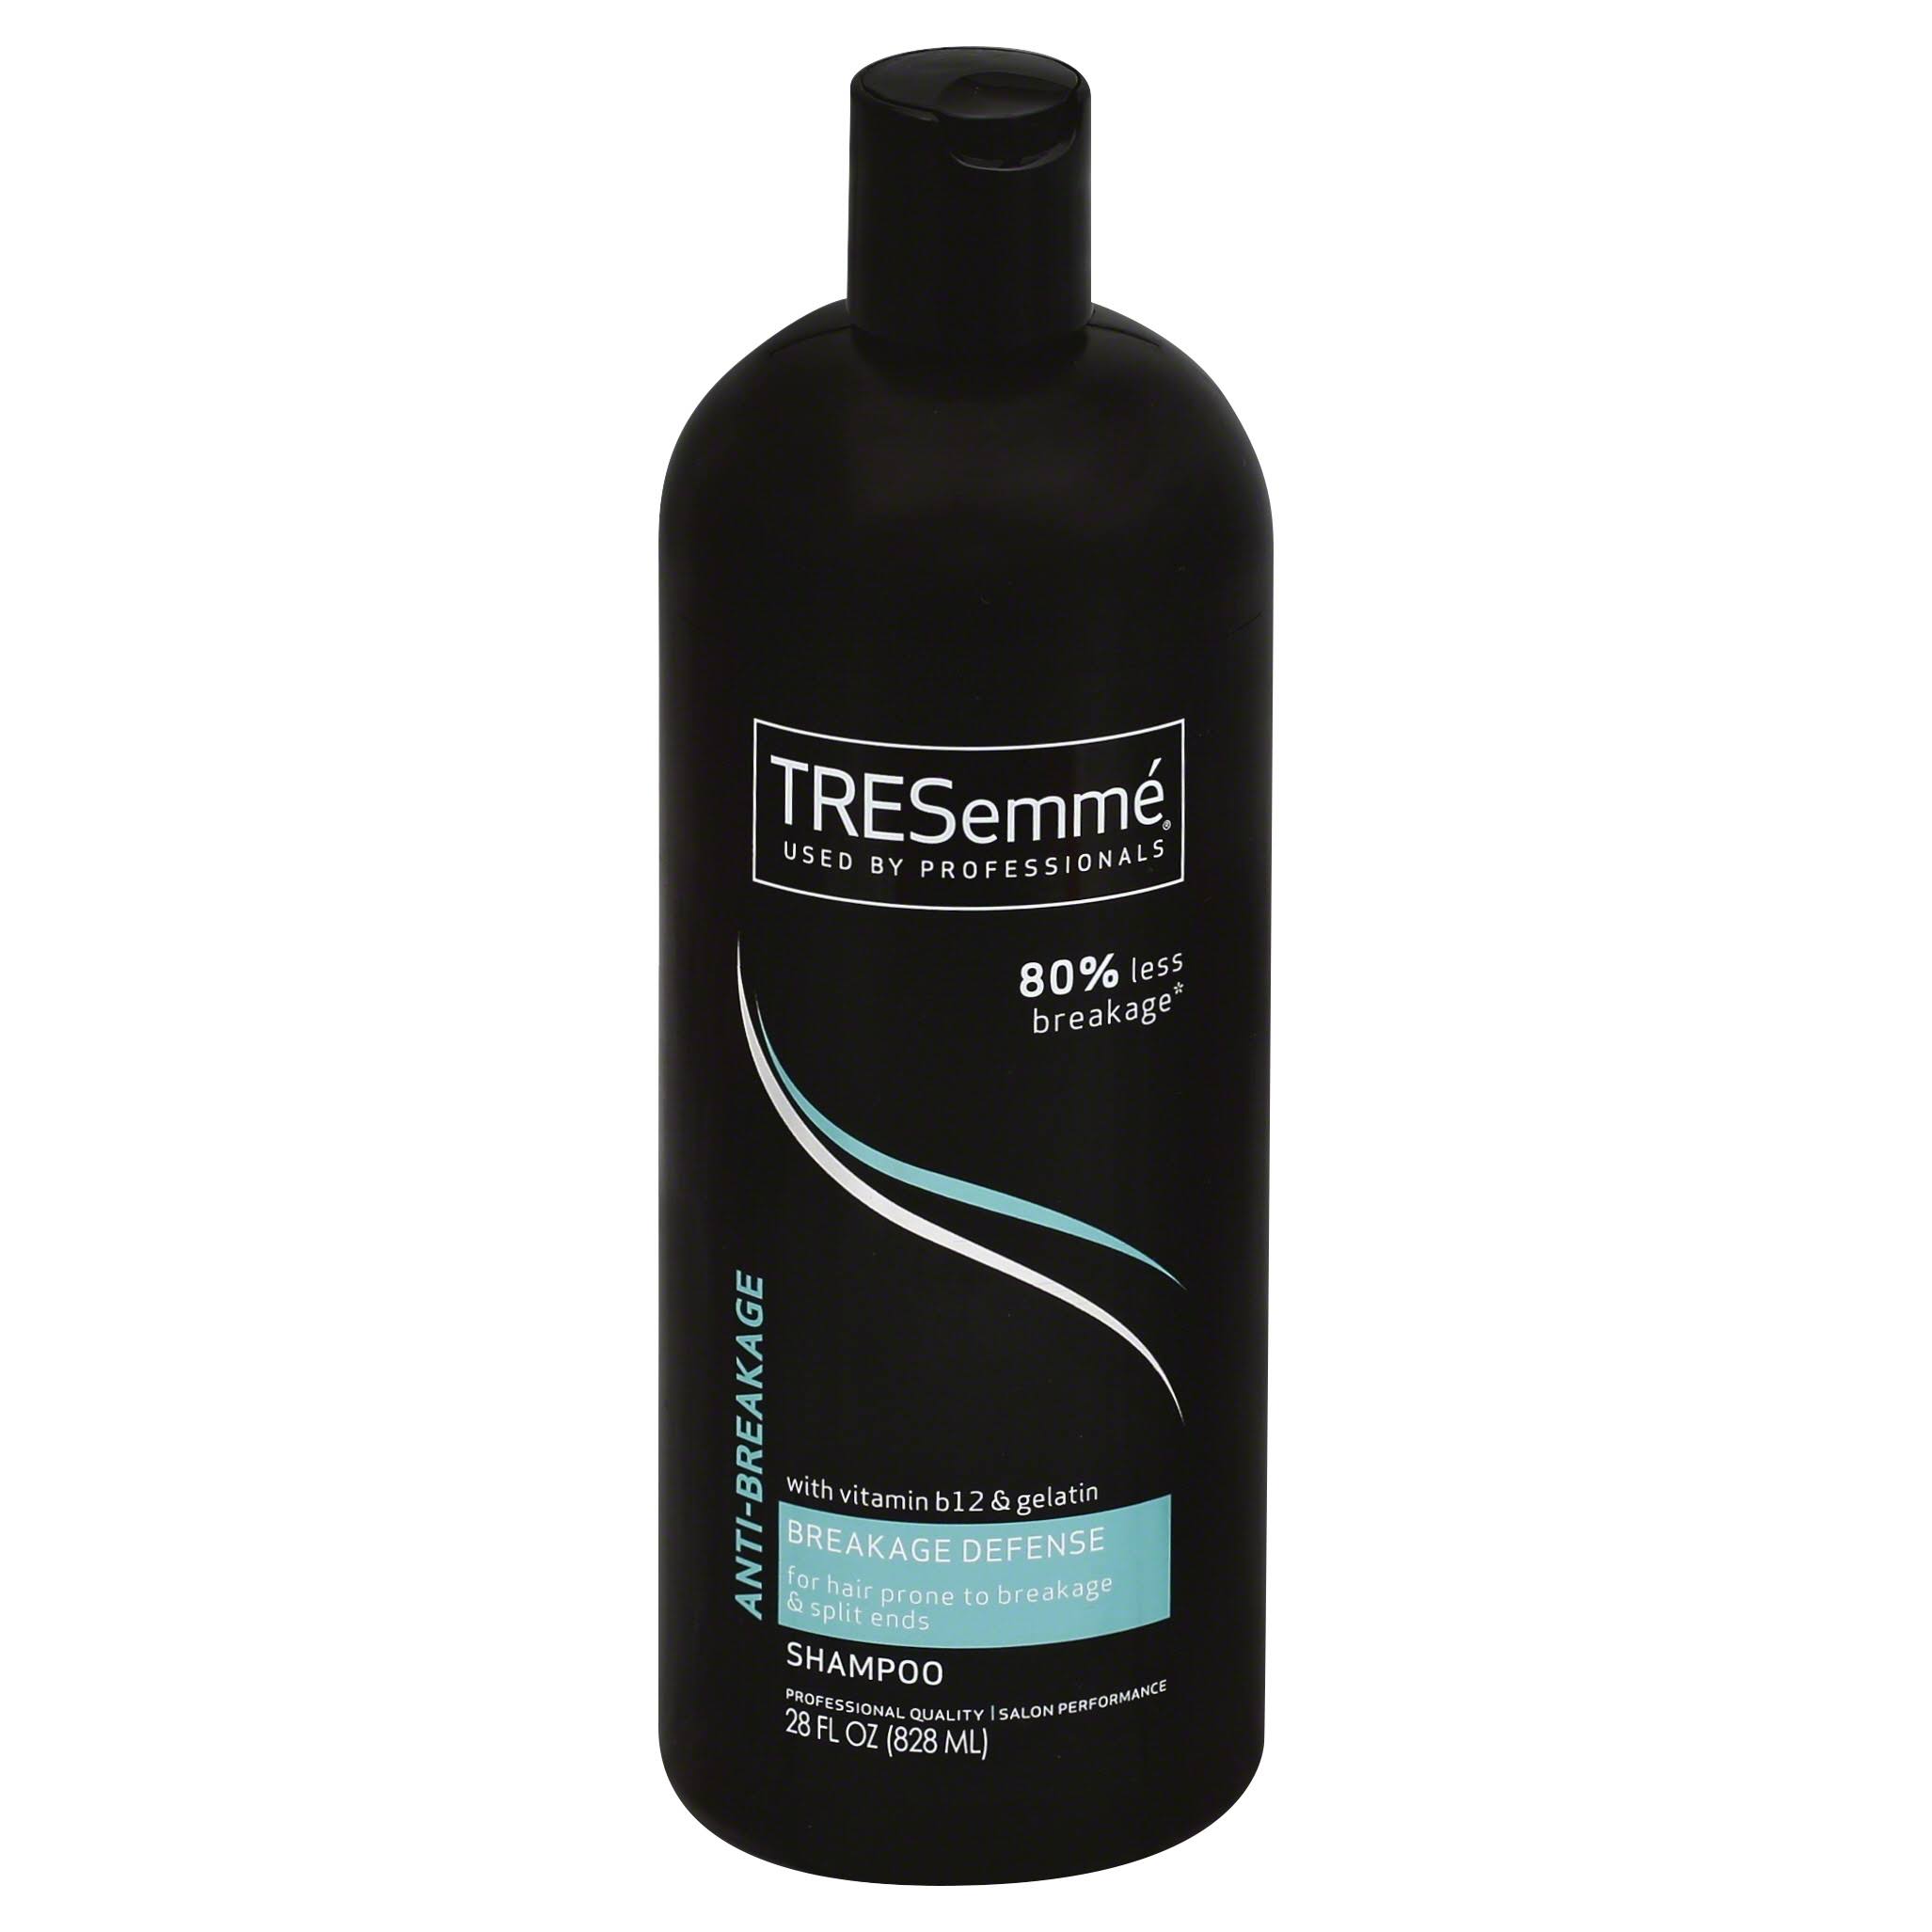 TRESemmé Anti-Breakage Shampoo - 28 fl oz